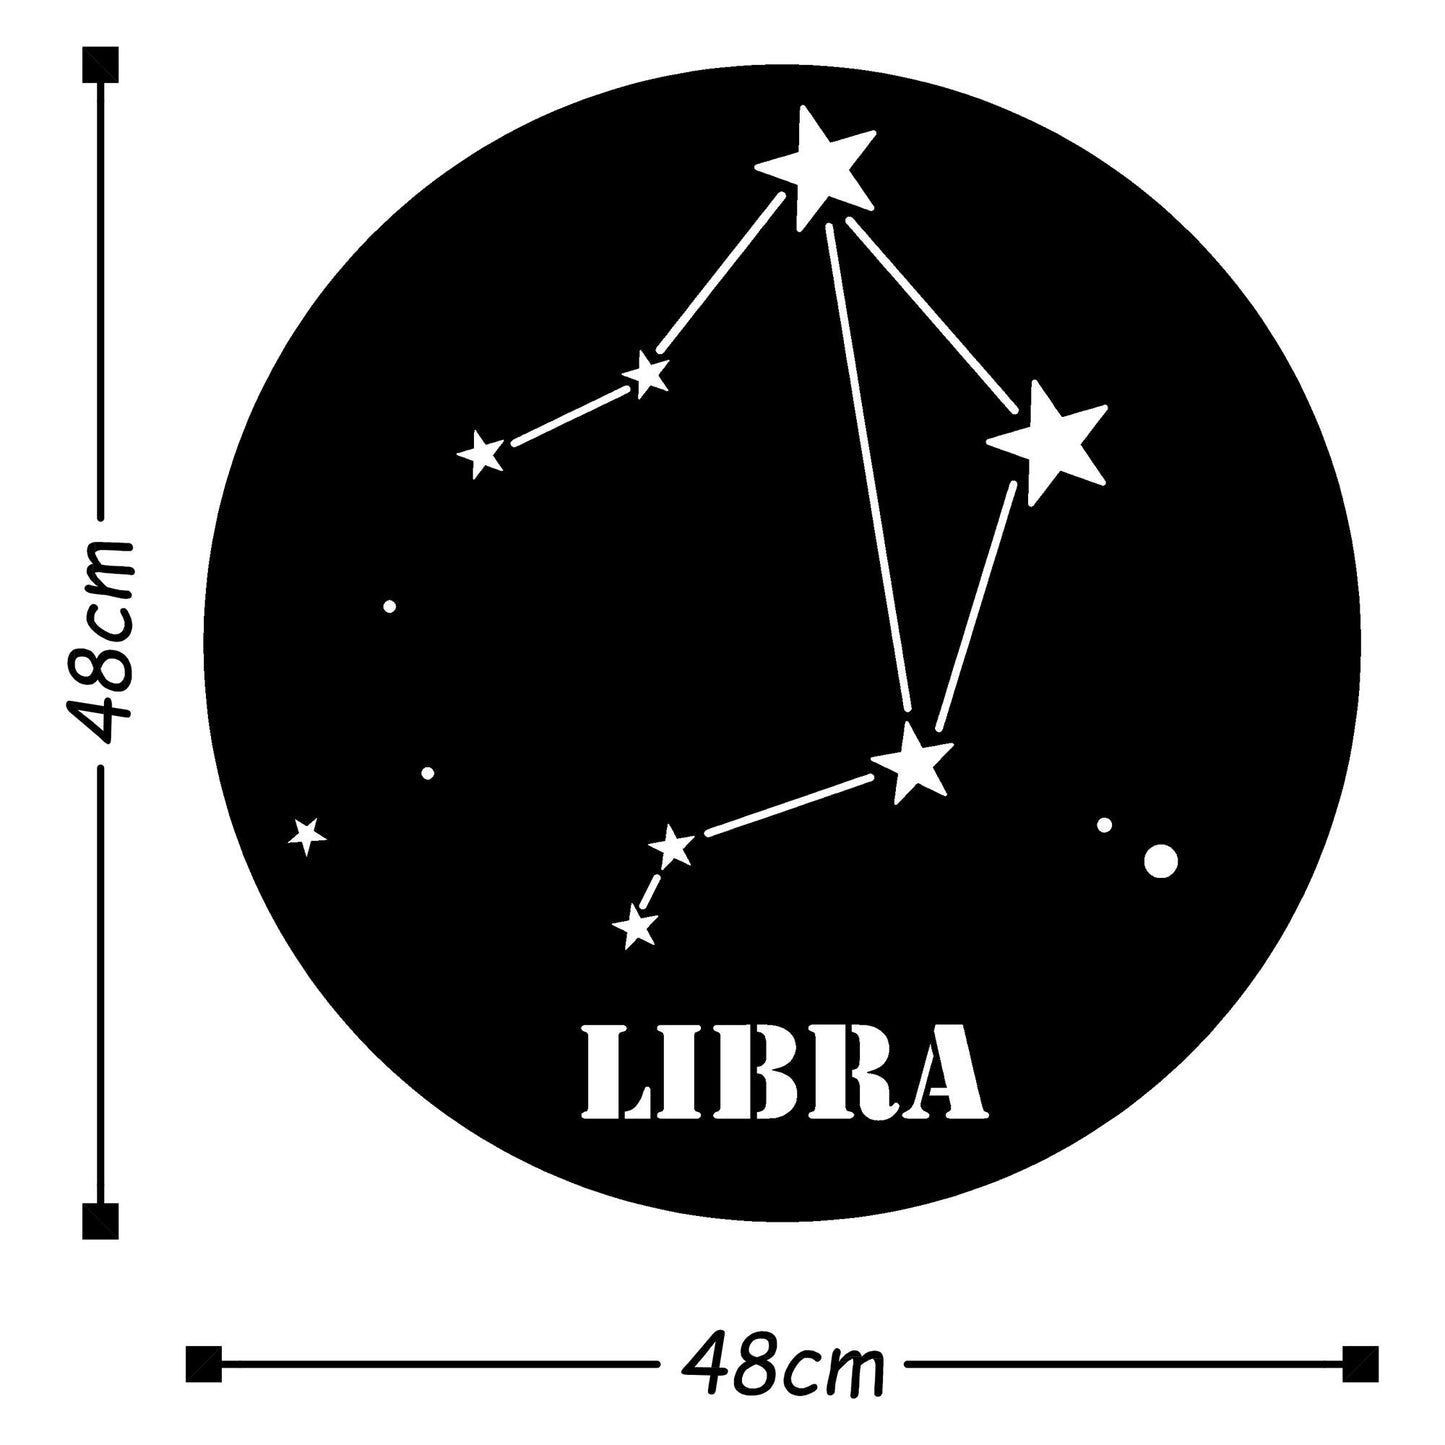 Lıbra Horoscope - Black - Decorative Metal Wall Accessory